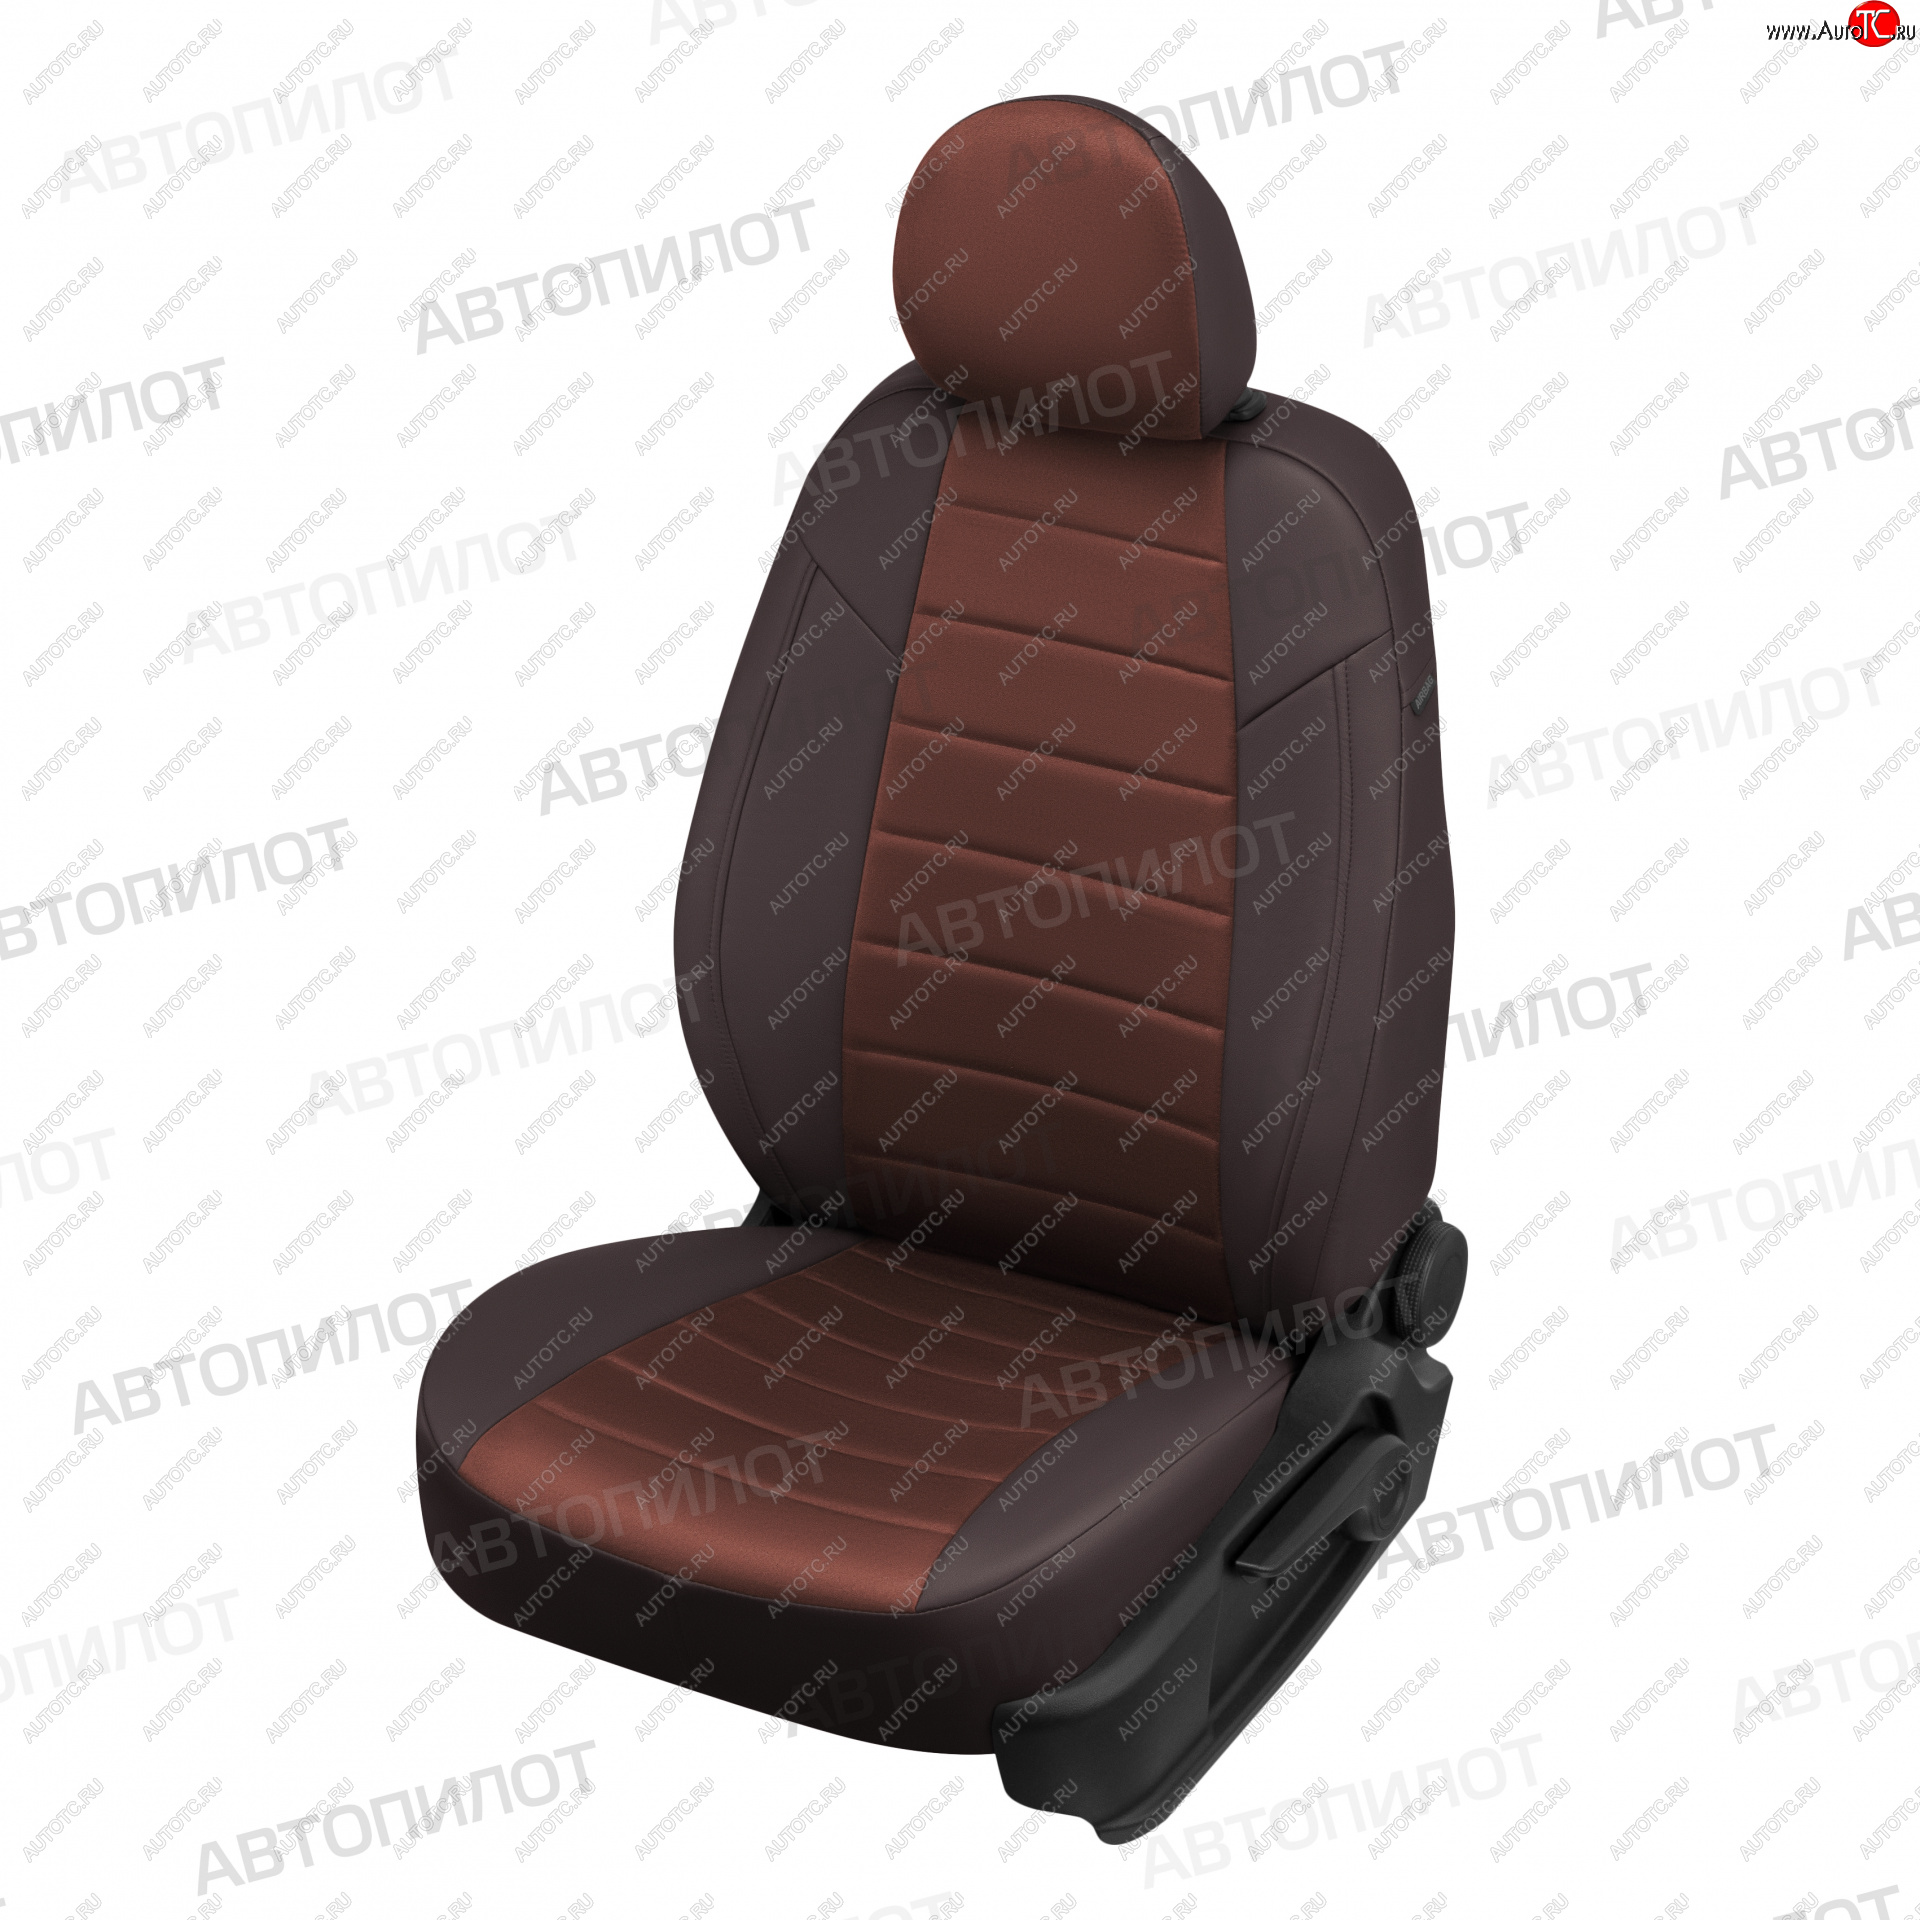 13 449 р. Чехлы сидений (экокожа/алькантара) Автопилот  Chevrolet Trailblazer  GM800 (2012-2016) (шоколад)